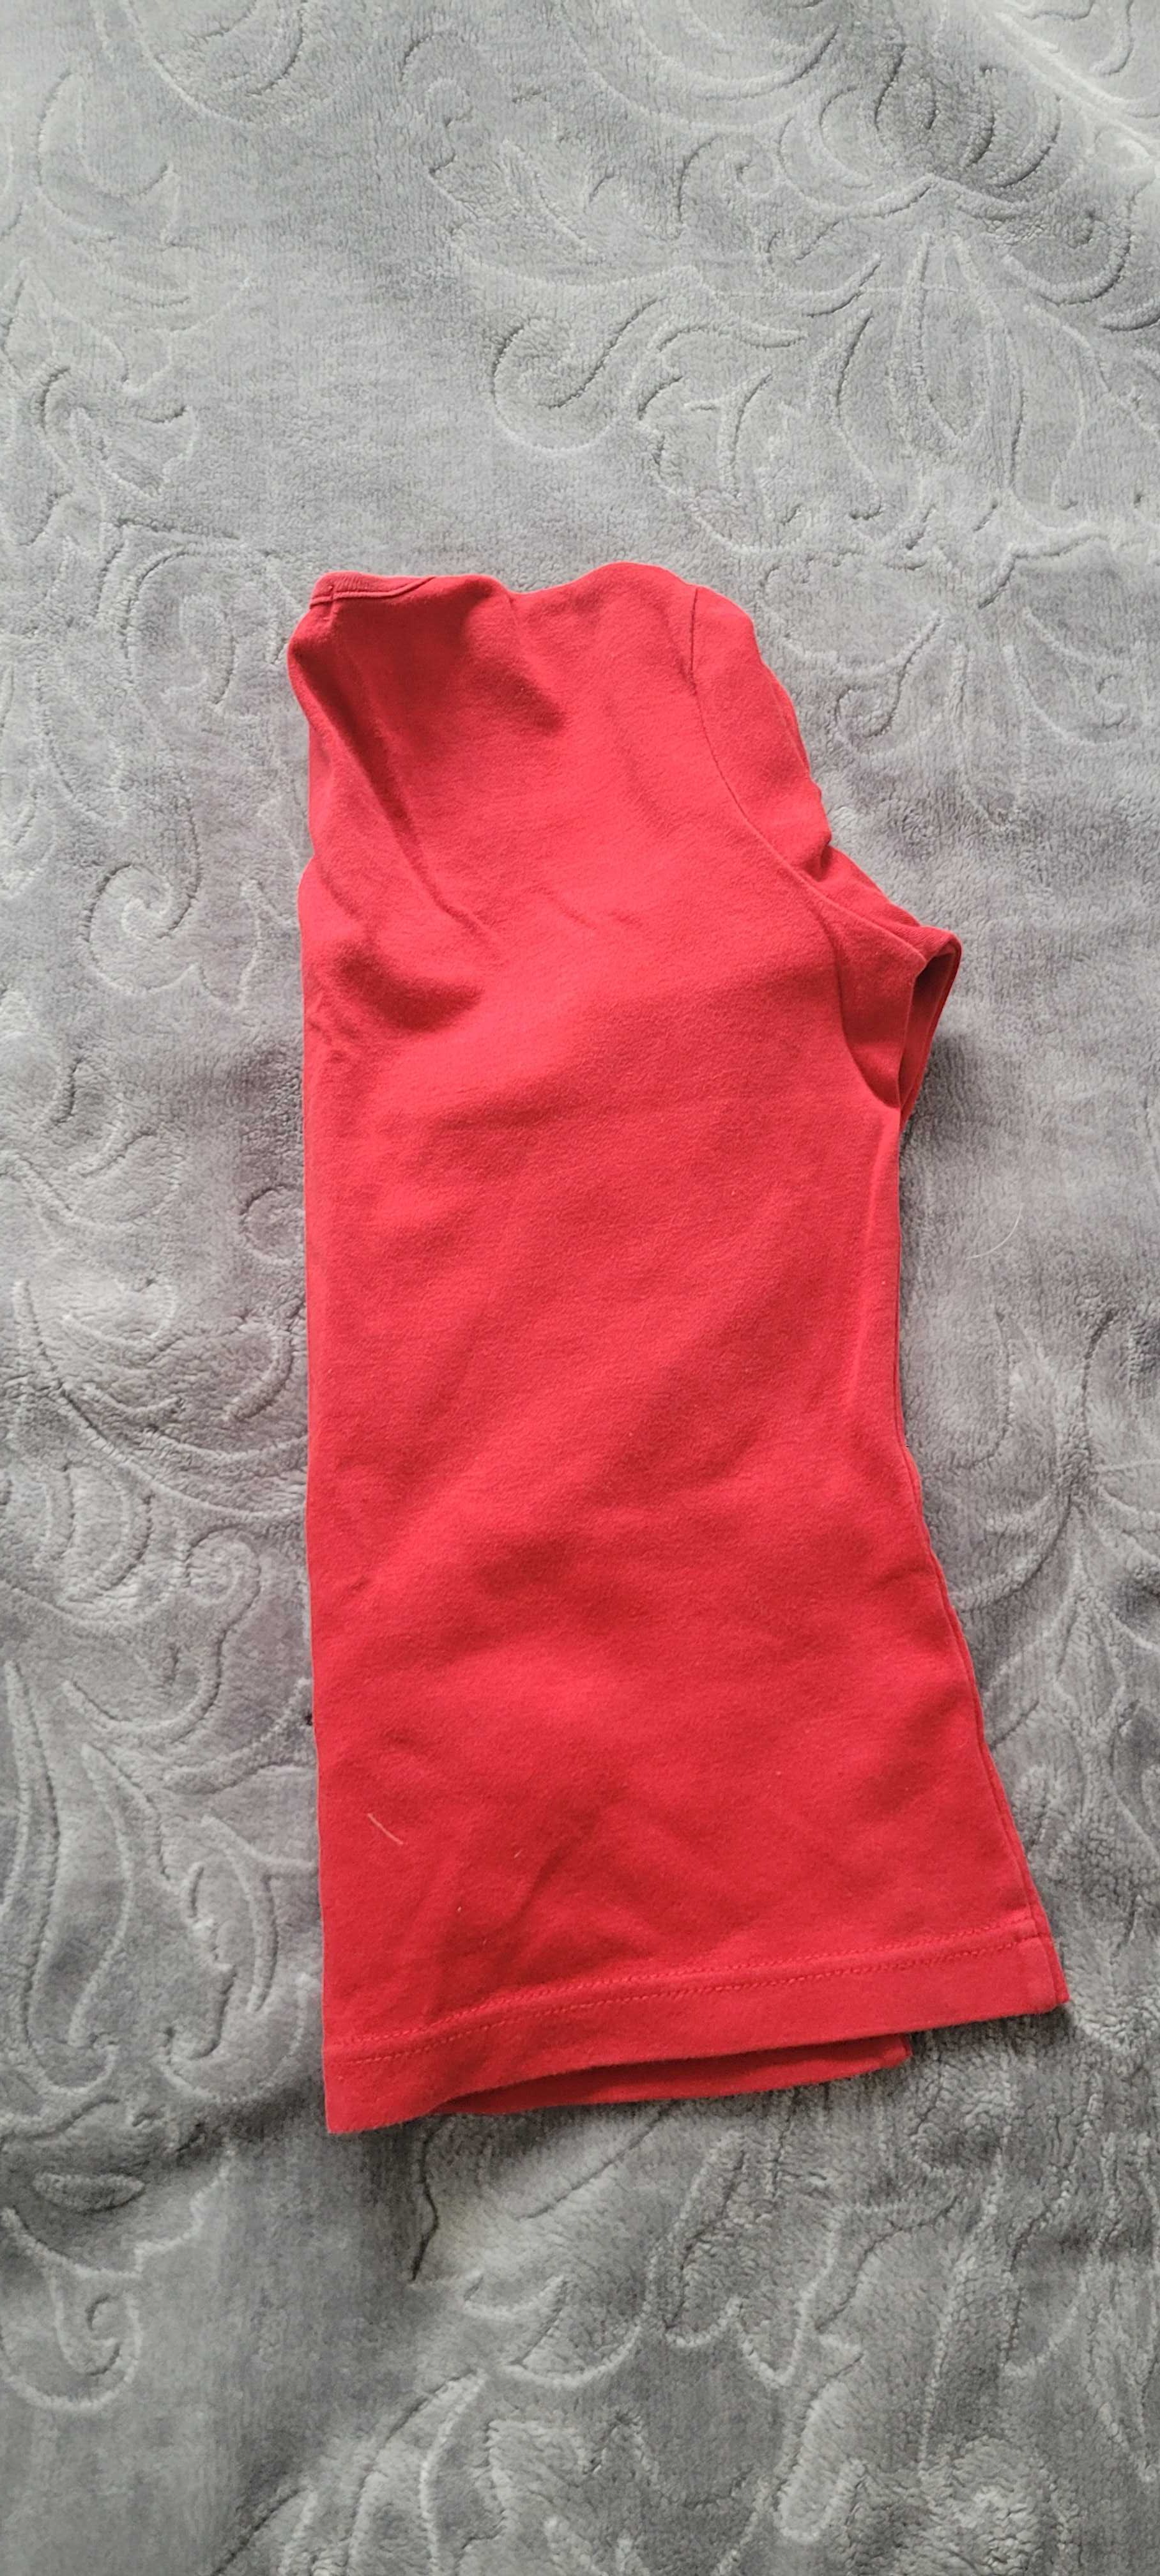 Damska czerwona bluzka